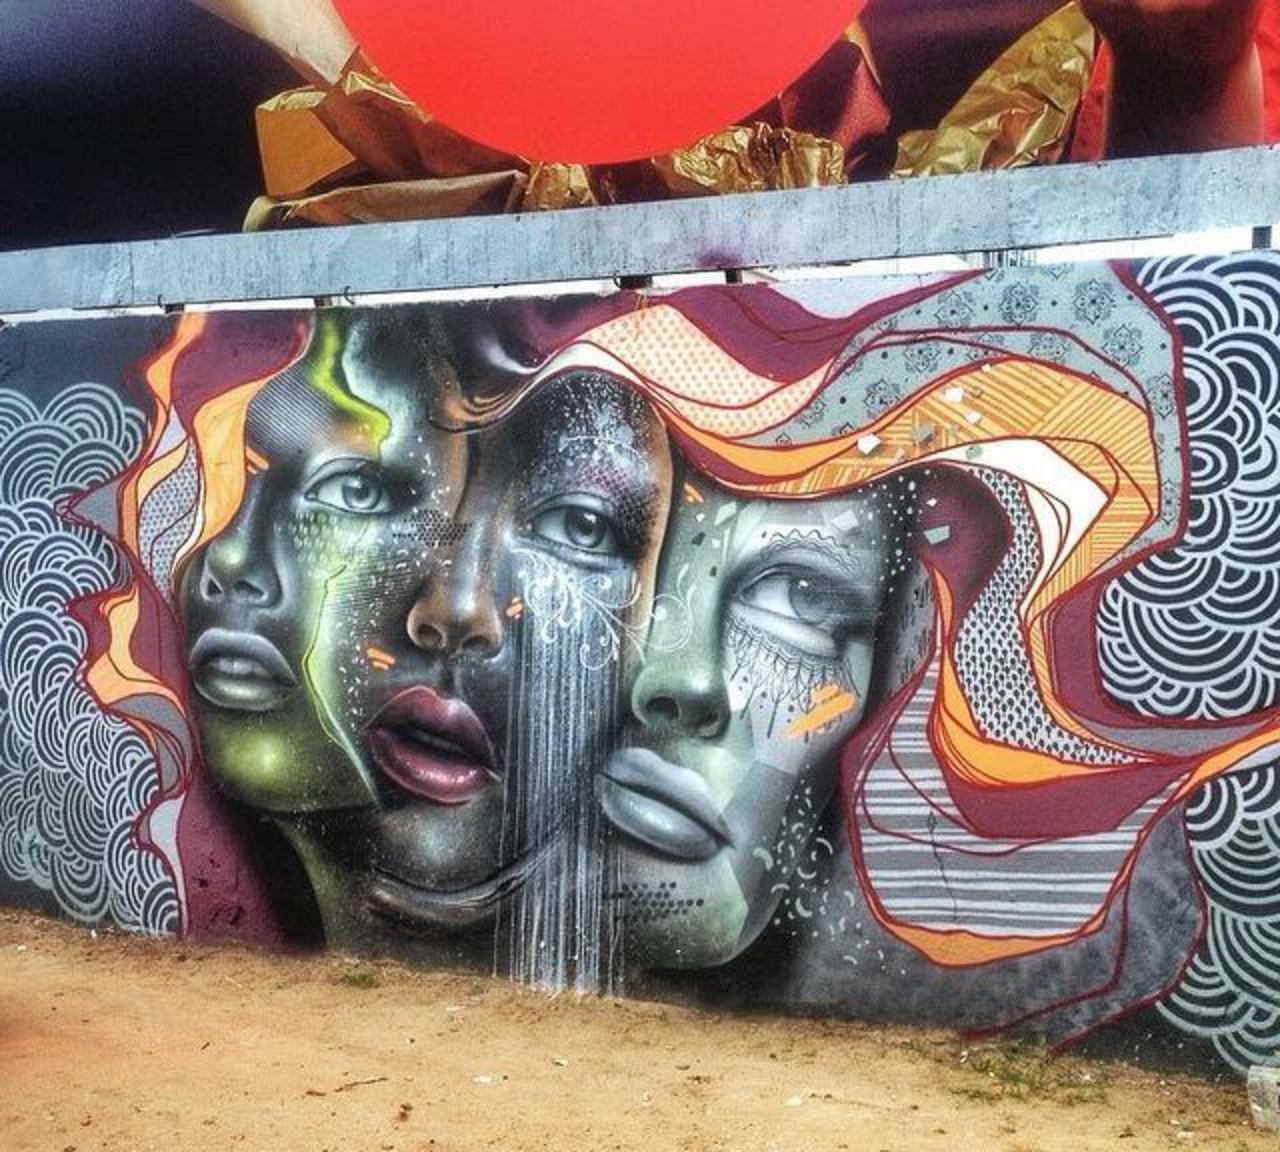 I am Groot. @I___am___Groot_: Amazing Street Art by AQI Luciano in Maceió, Brazil 

#art #arte #graffiti #streetart http://t.co/O9UxsqVcUn